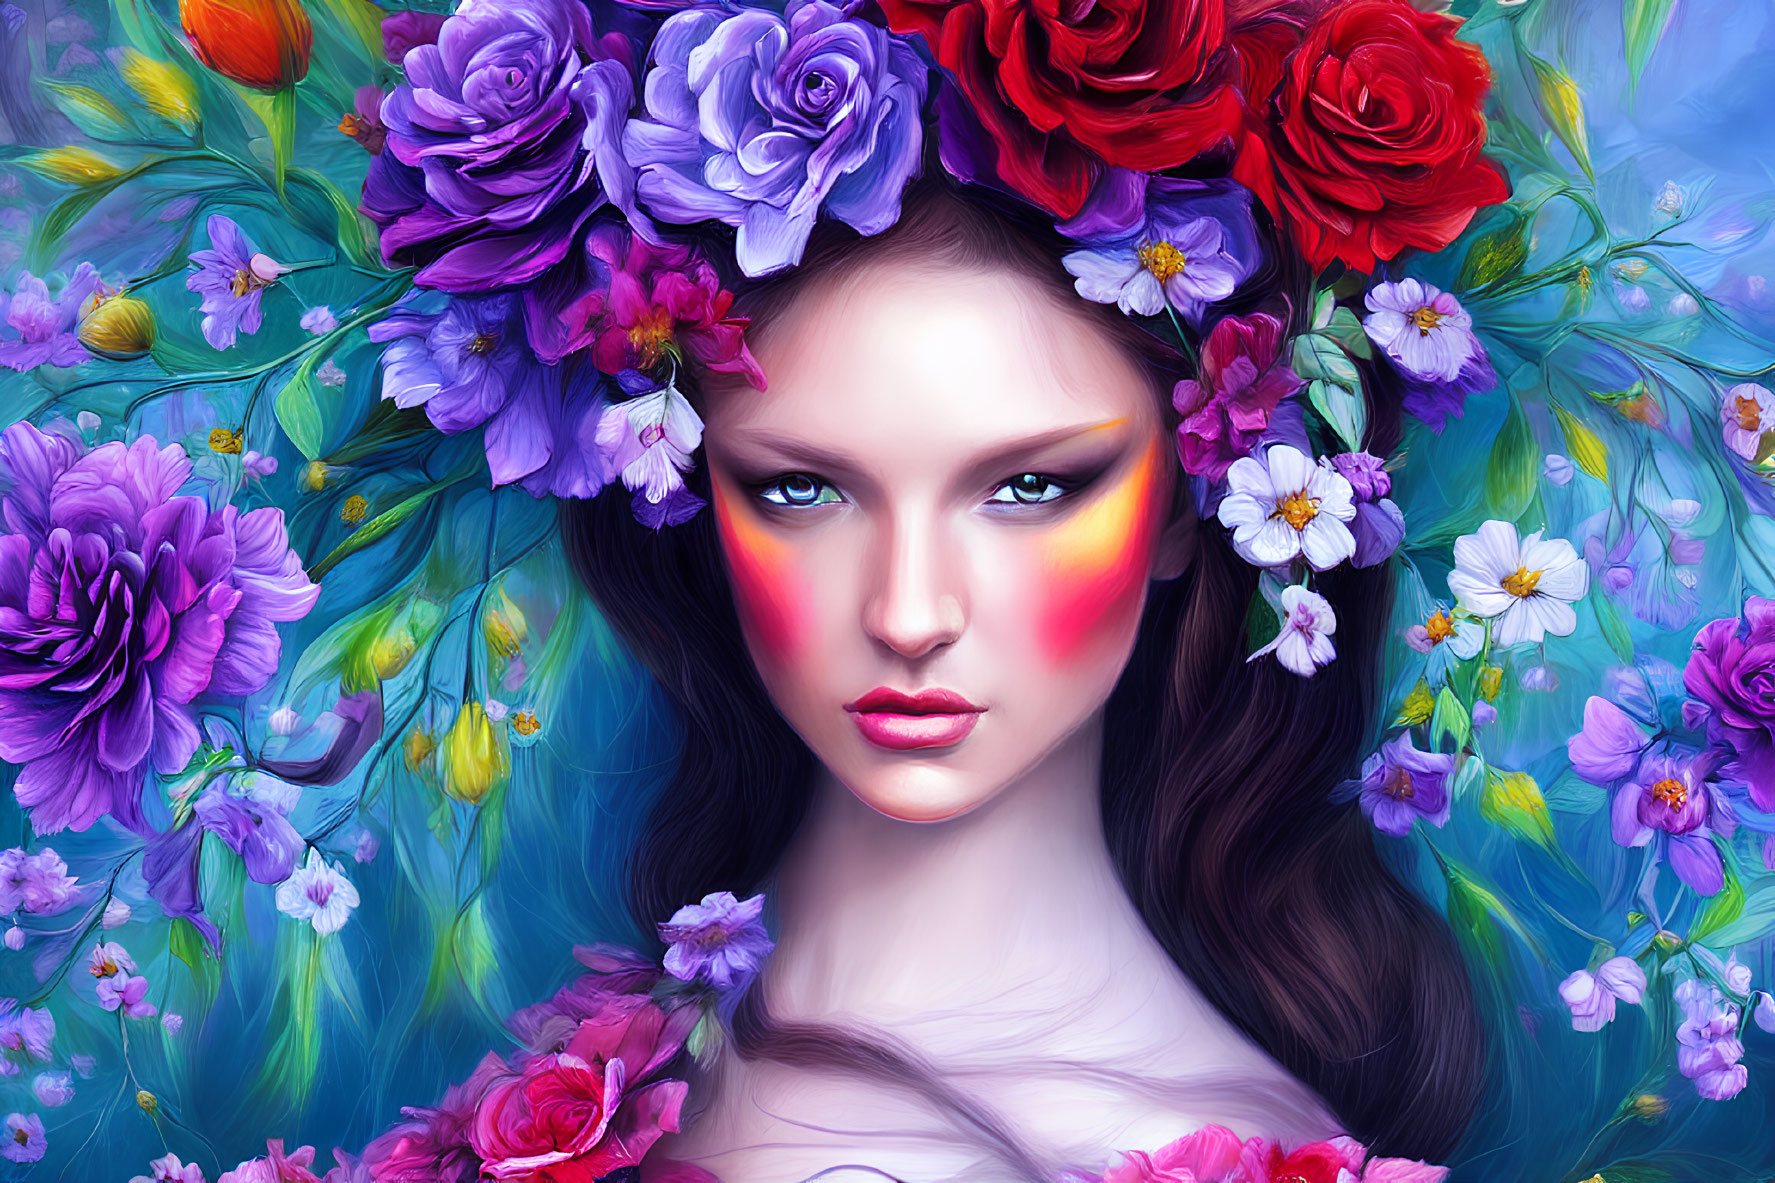 Colorful floral crown digital art portrait of a woman on blue background